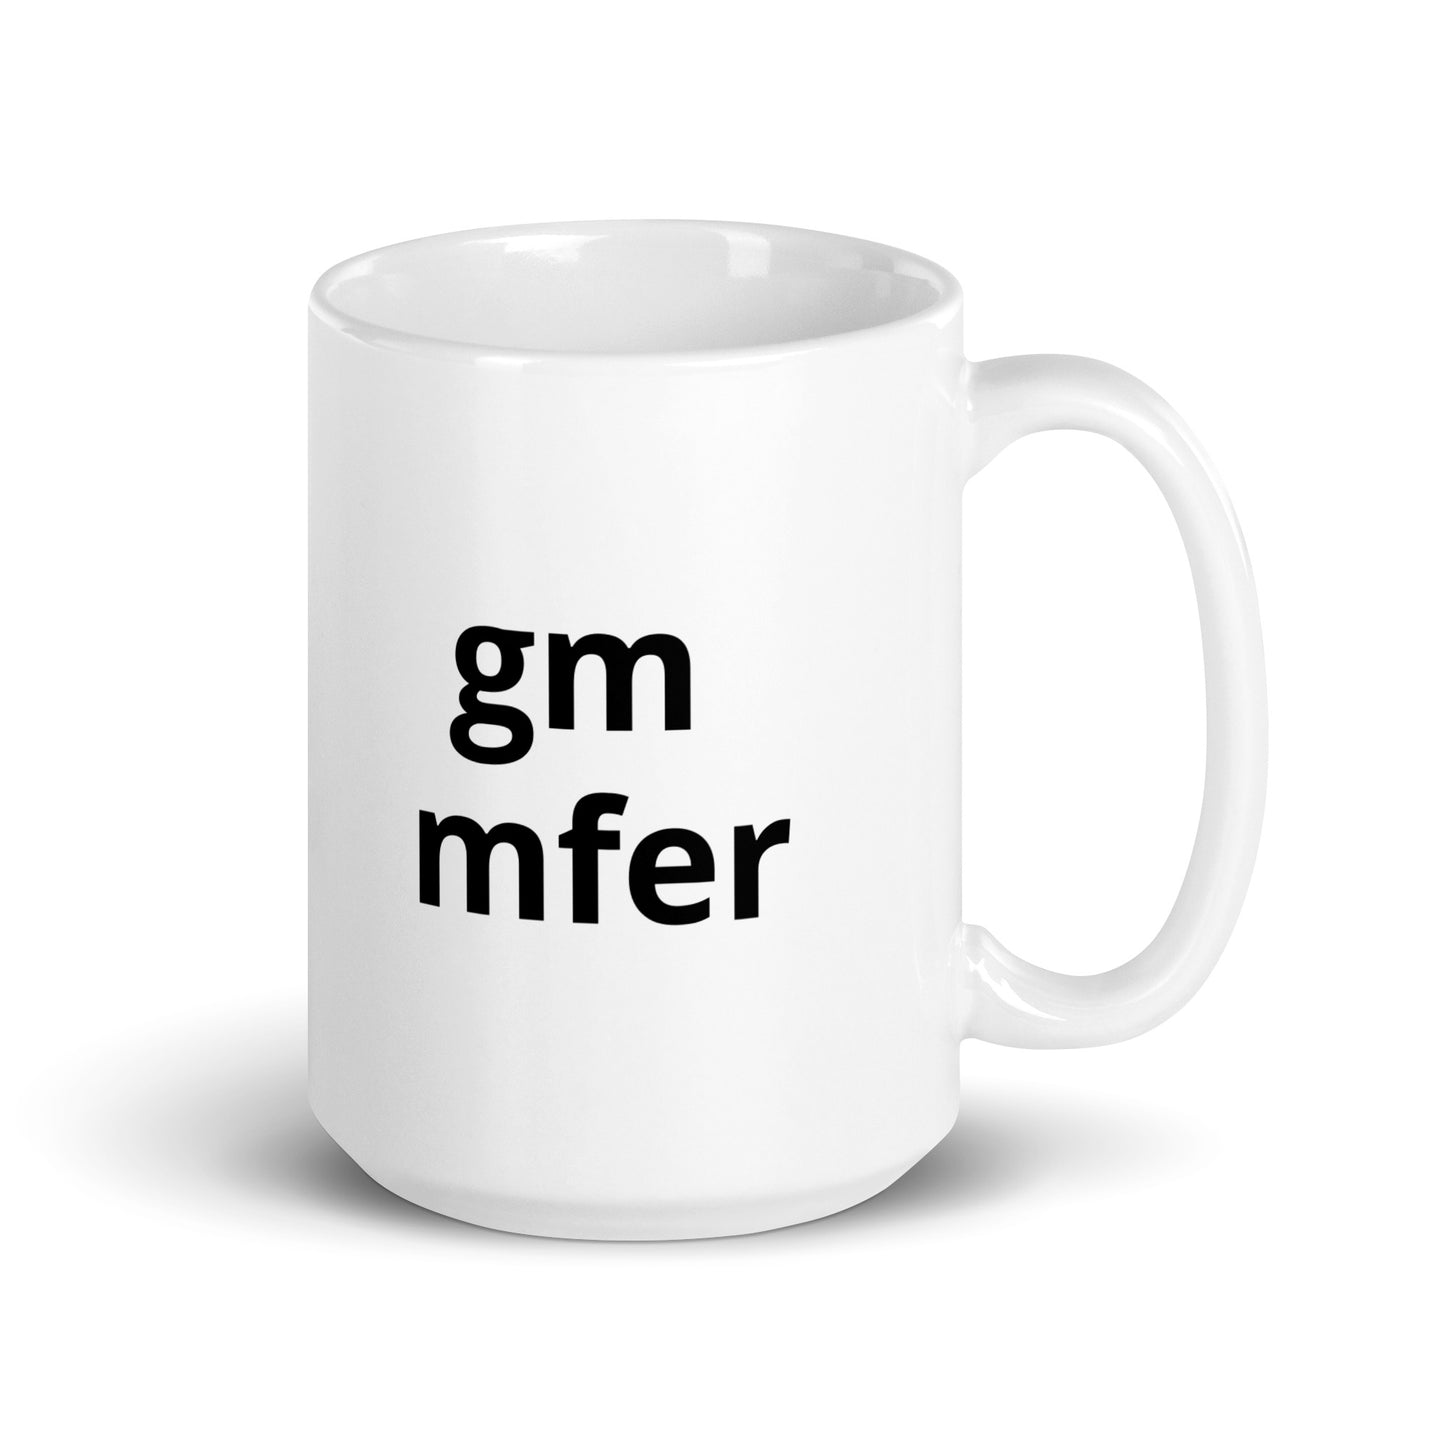 gm mfer mug